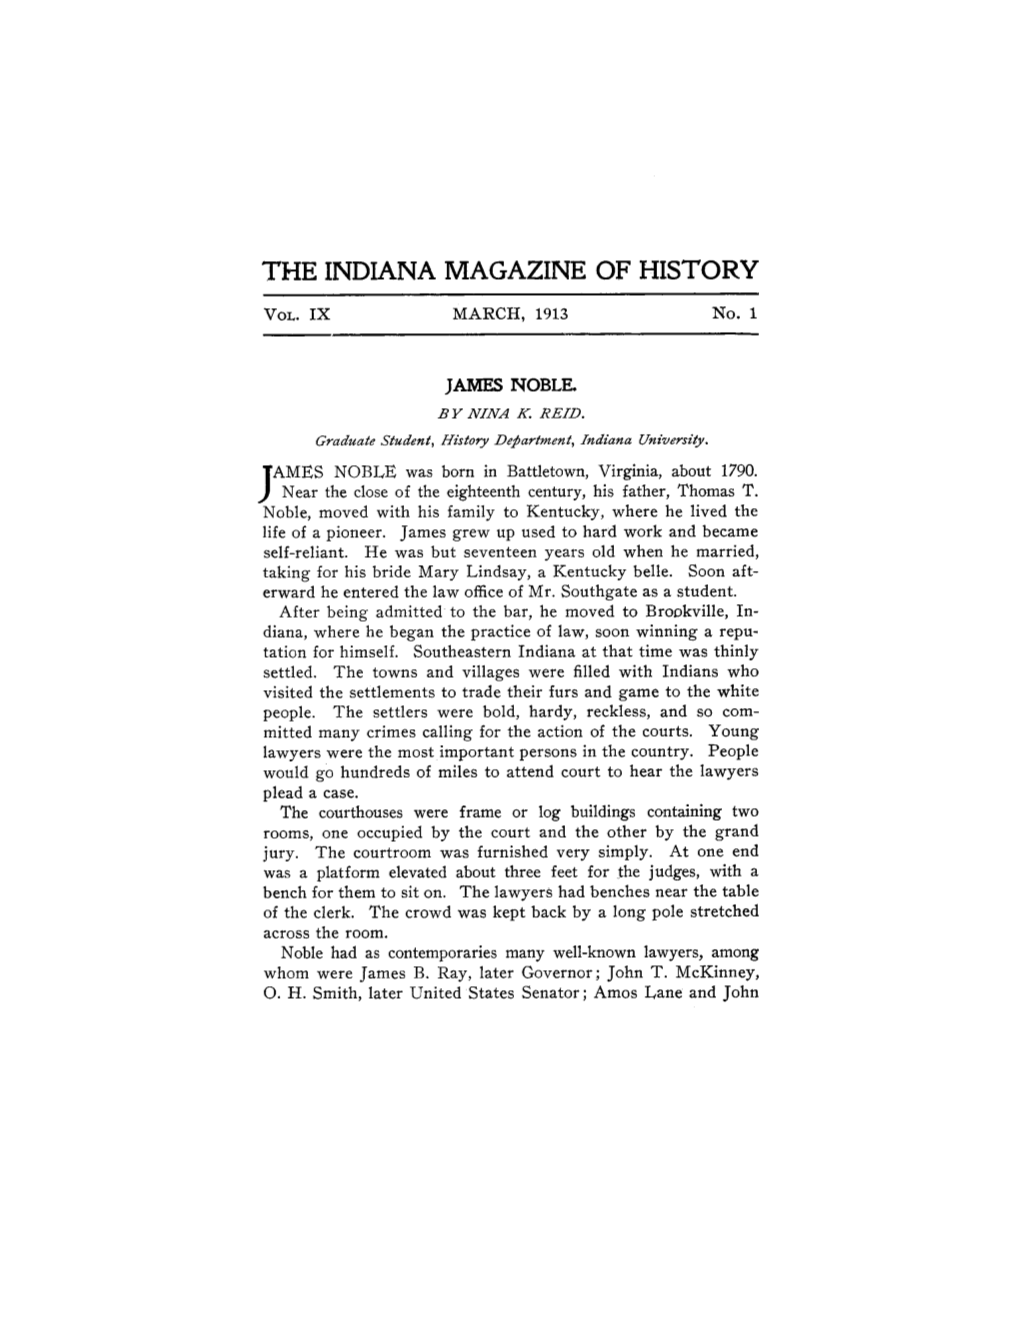 The Indiana Magazine of History